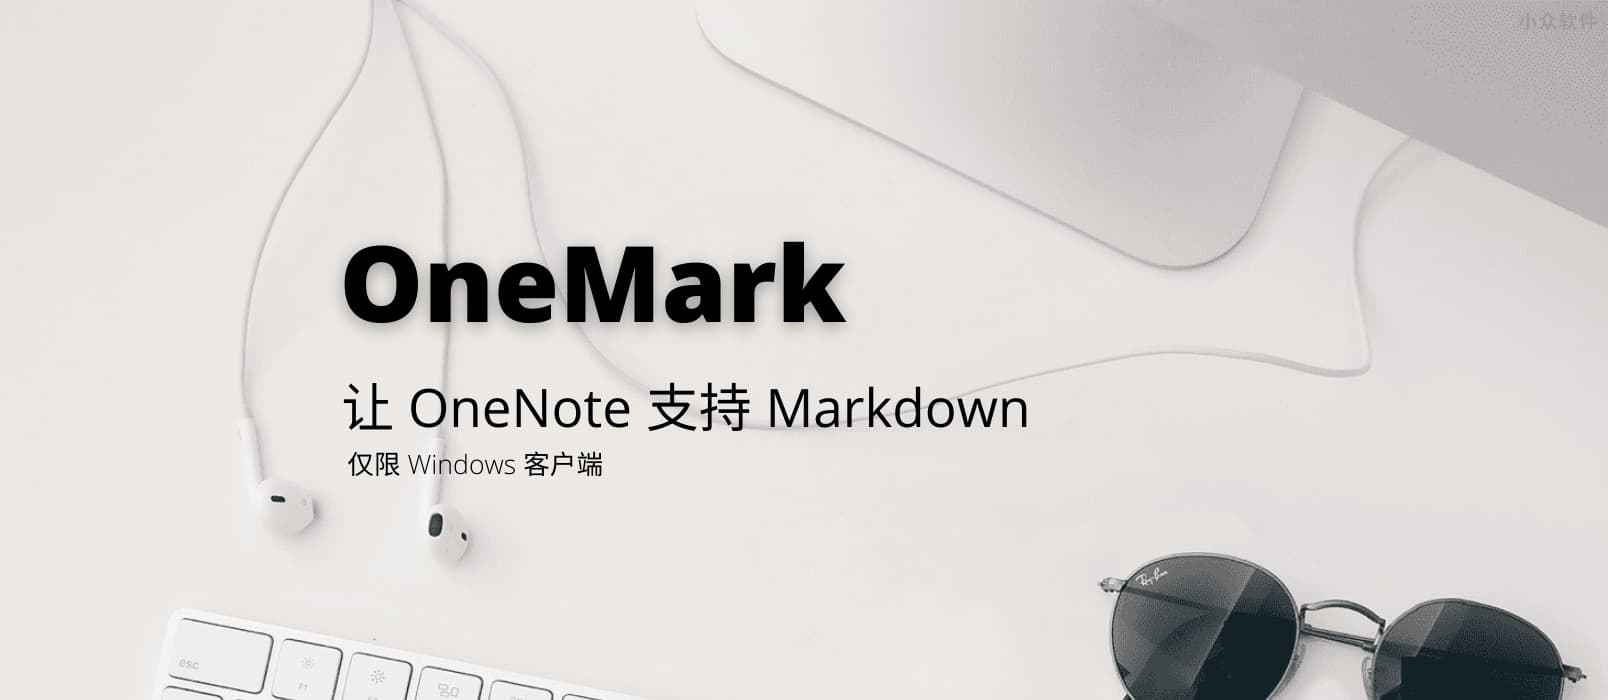 OneMark – 让 Windows 下的 OneNote 支持 Markdown